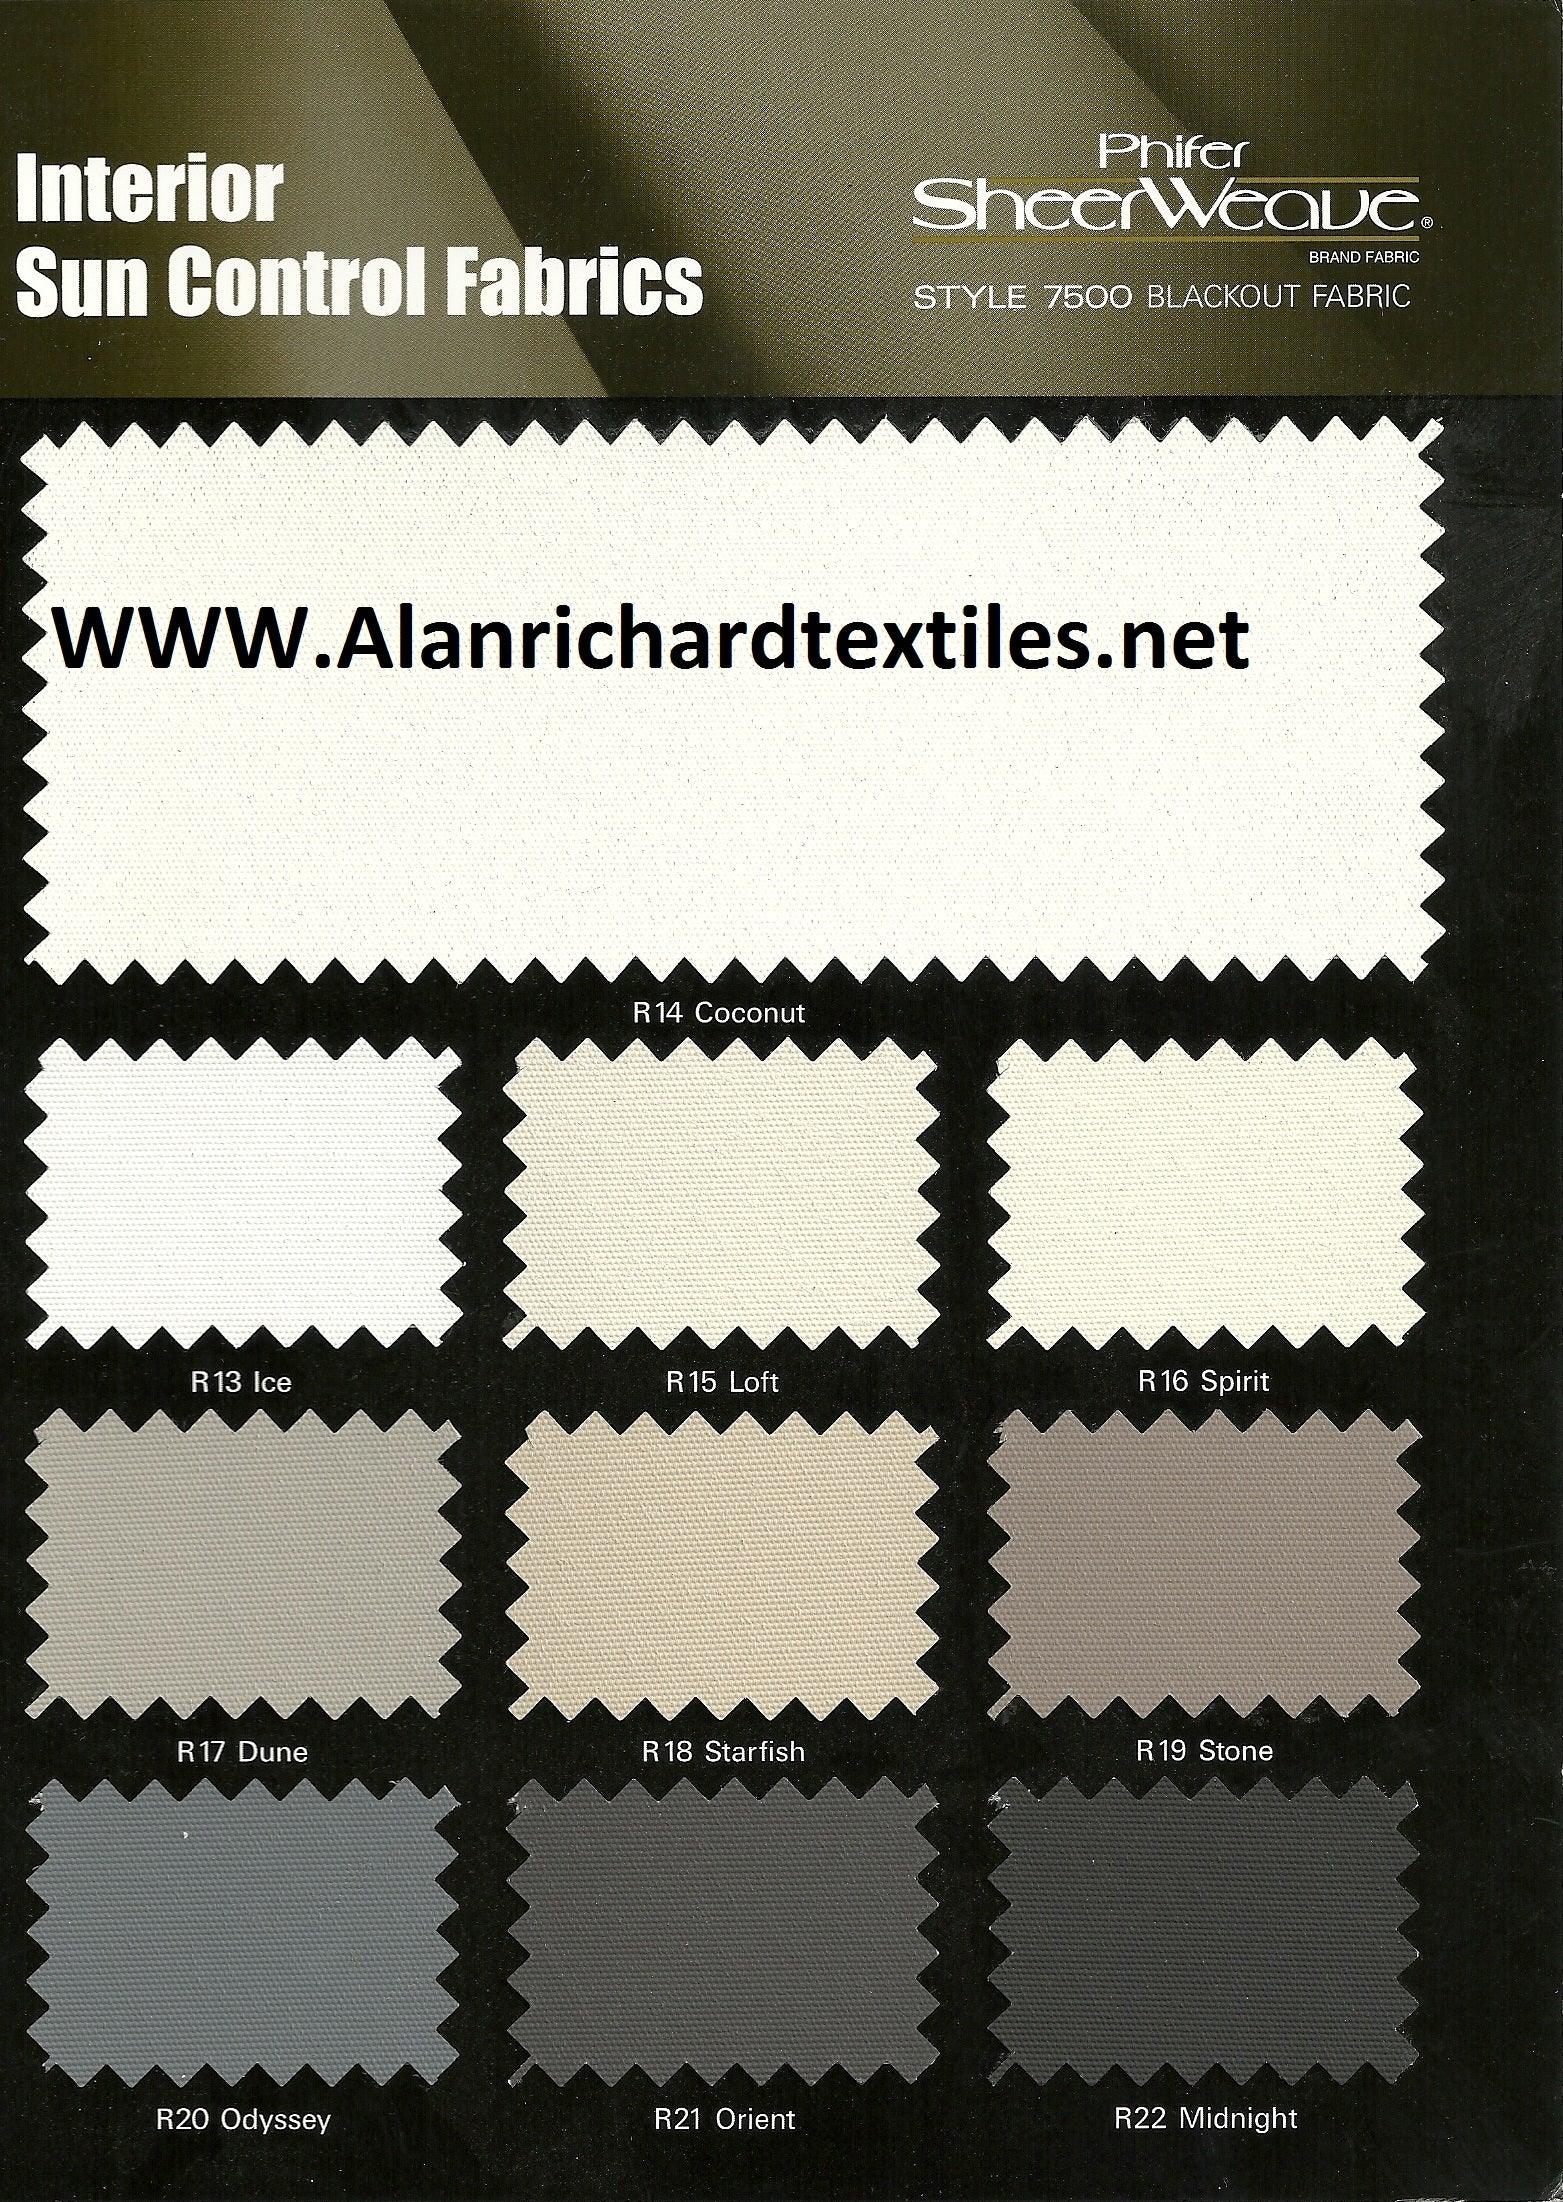 61-72"(Width) 7500 SheerWeave® Series - Alan Richard Textiles, LTD 7500 Phifer SheerWeave� Series (blackout)